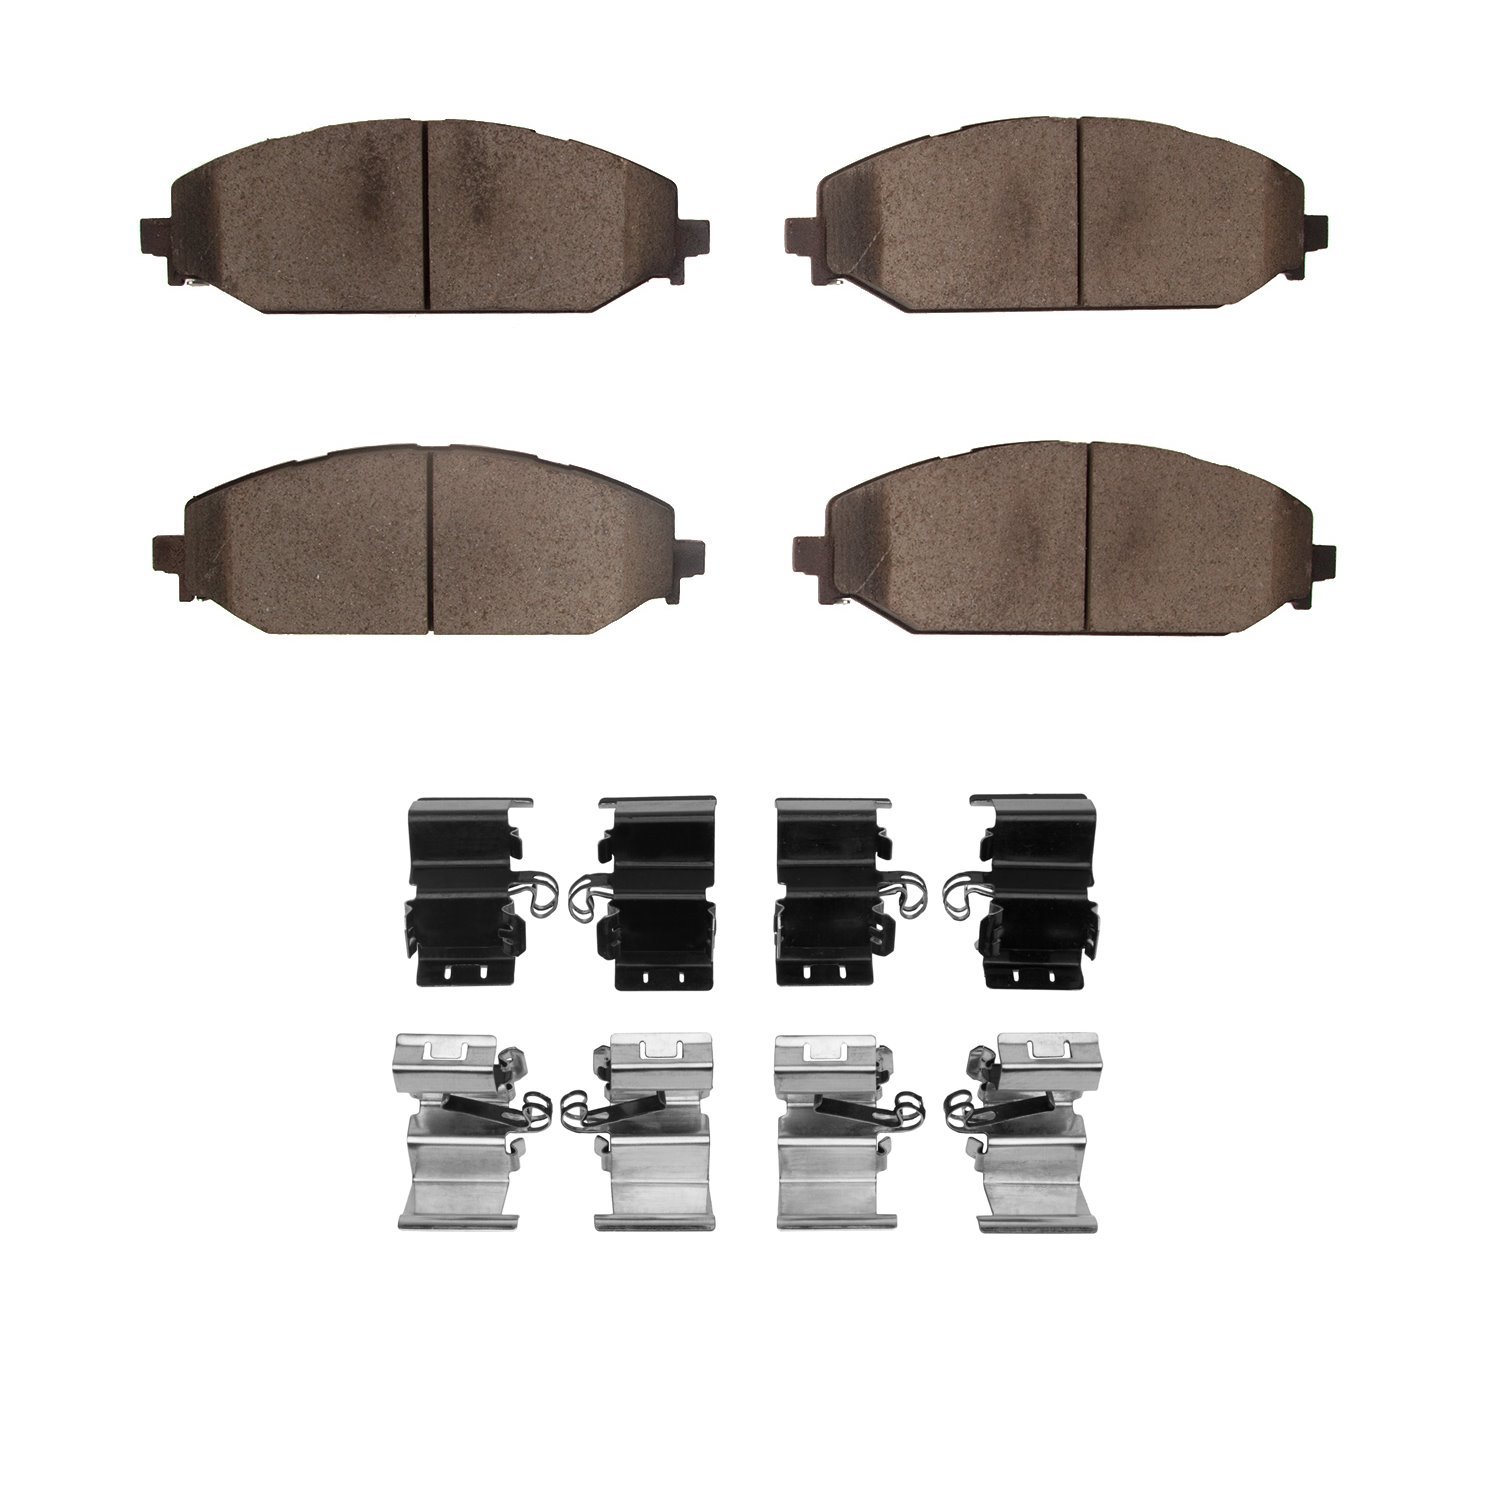 1310-2179-01 3000-Series Ceramic Brake Pads & Hardware Kit, Fits Select Mopar, Position: Front